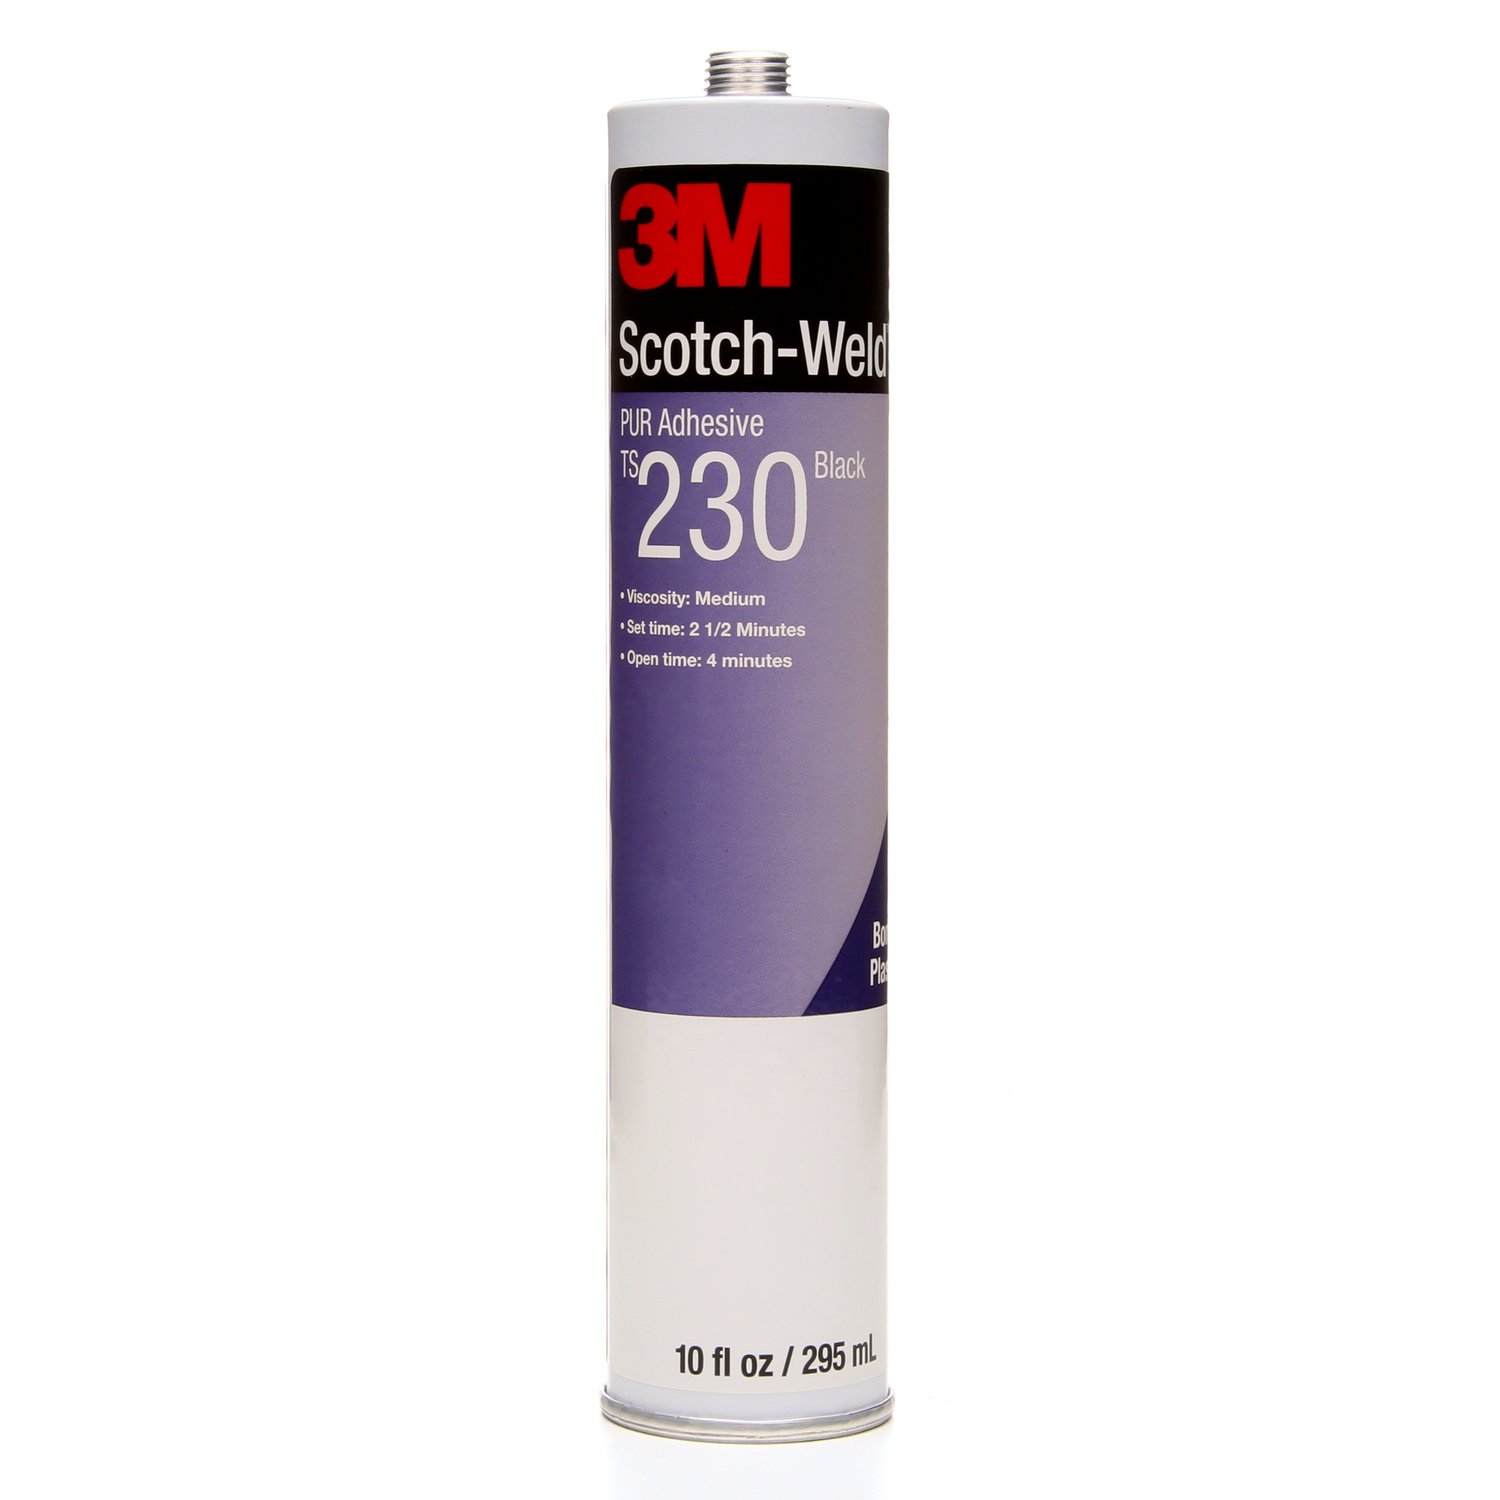 7000000906 - 3M Scotch-Weld PUR Adhesive TS230, Black, 1/10 Gallon Cartridge, 5
Bottle/Case